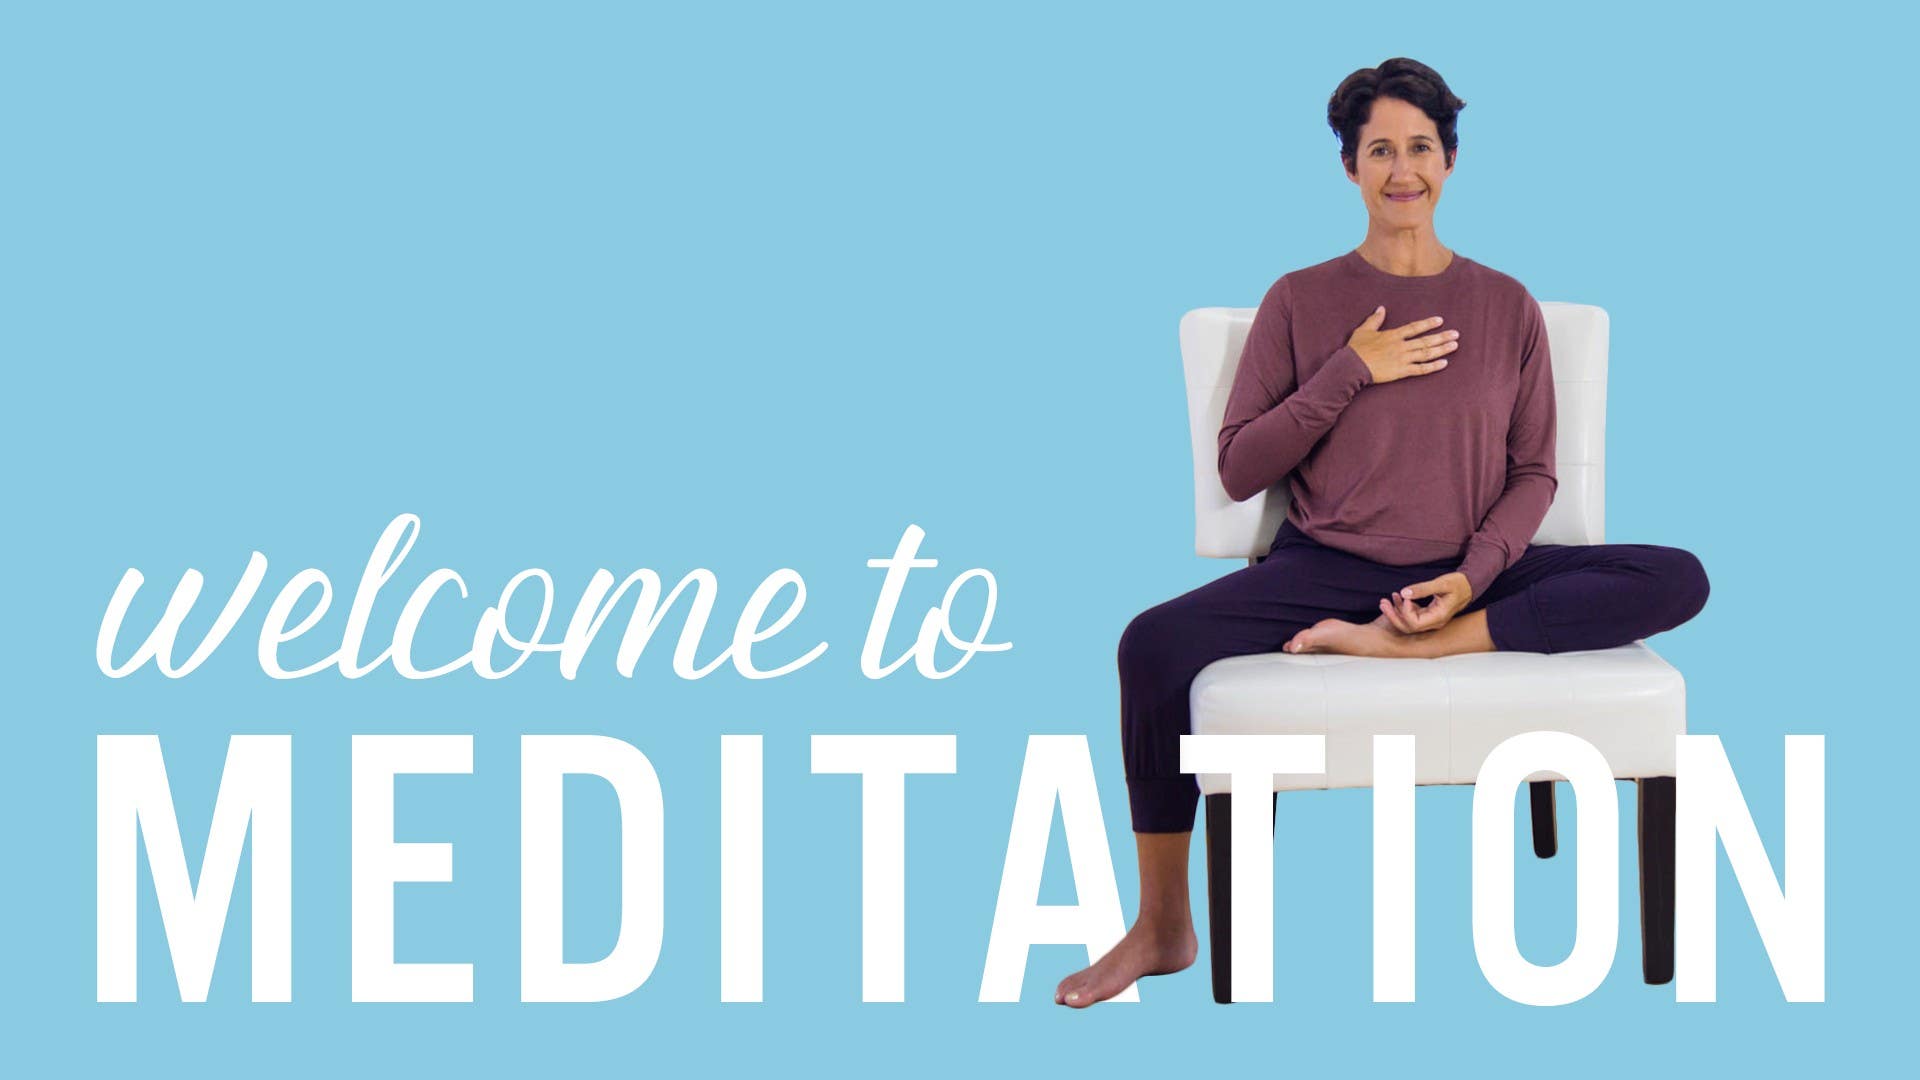 Welcome to Meditation Artwork